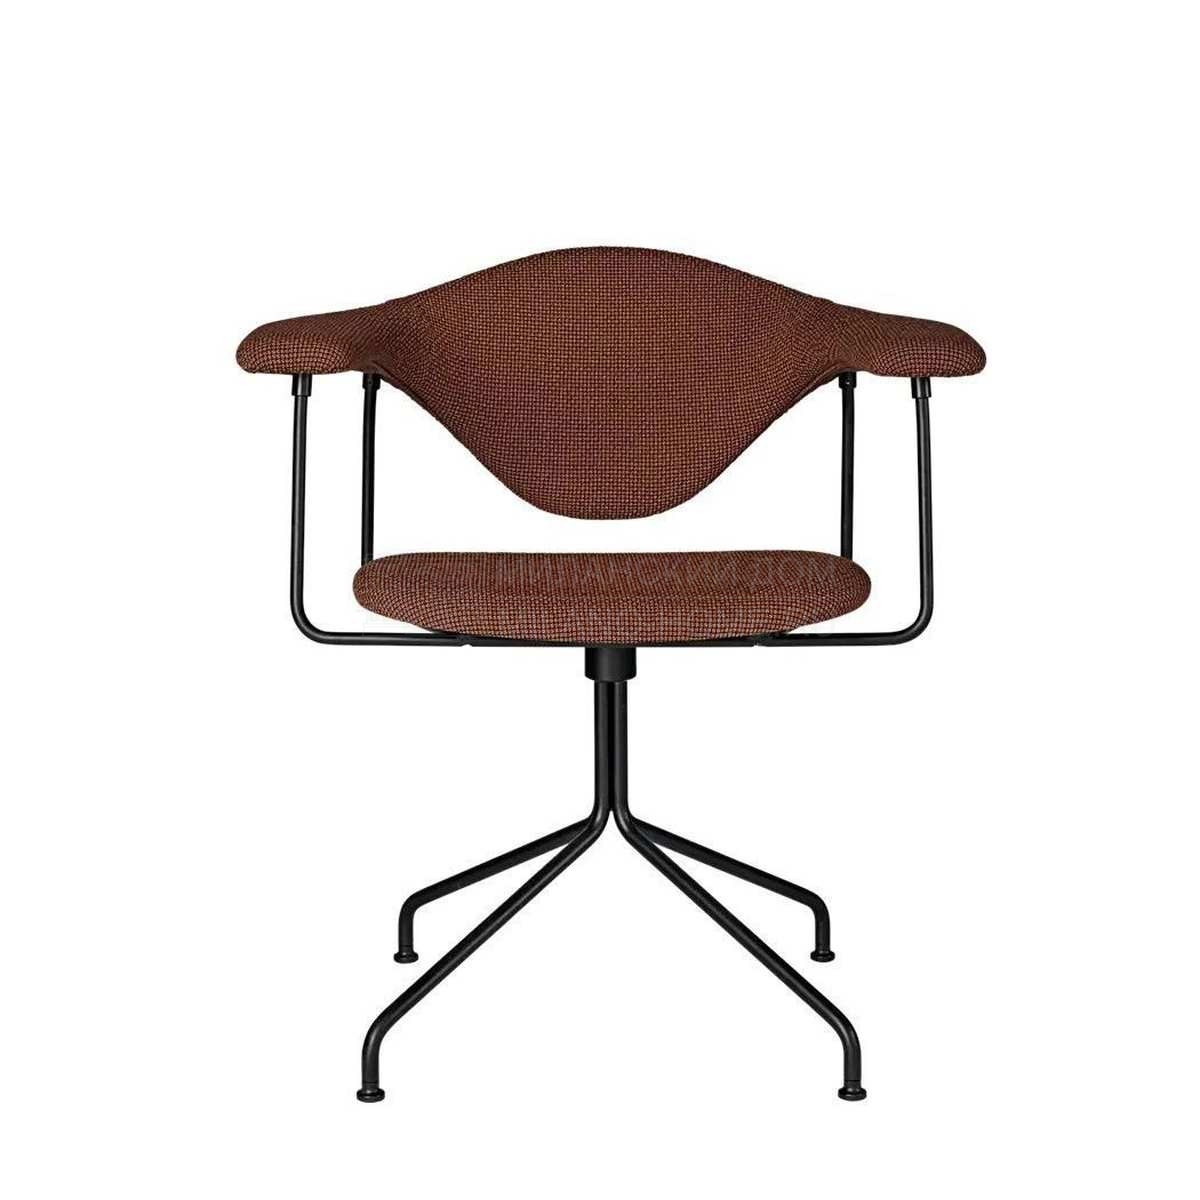 Рабочее кресло Masculo meeting chair из Дании фабрики GUBI